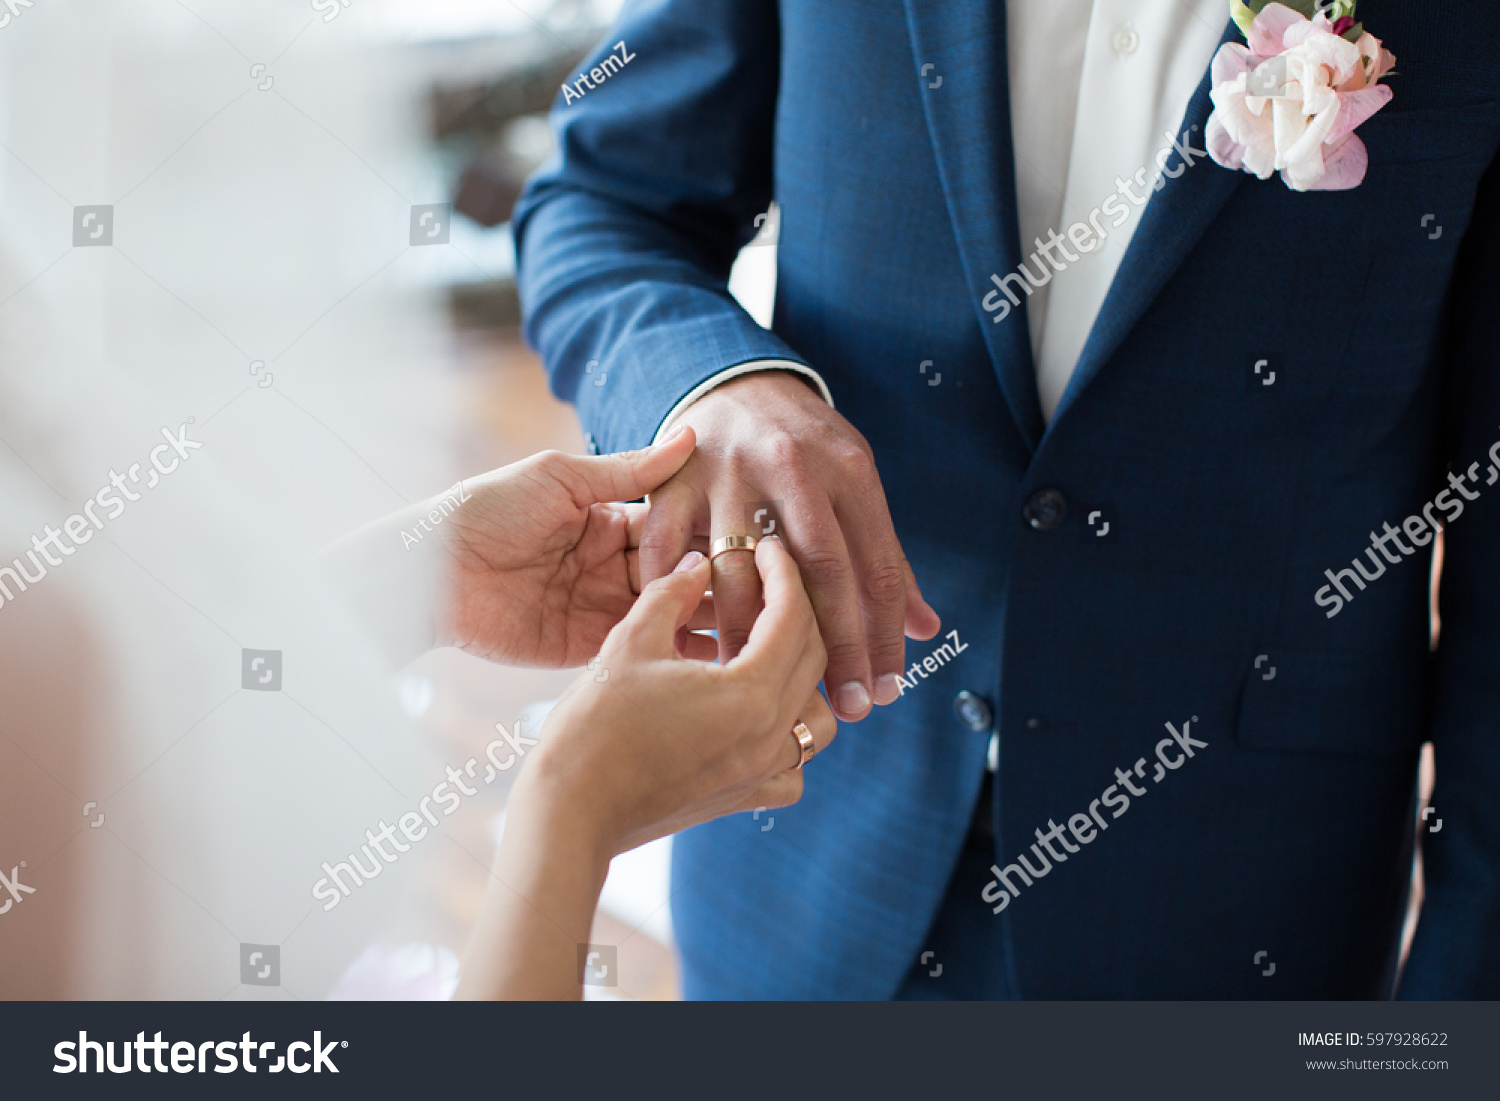 Bride puts ring on groom's finger #597928622